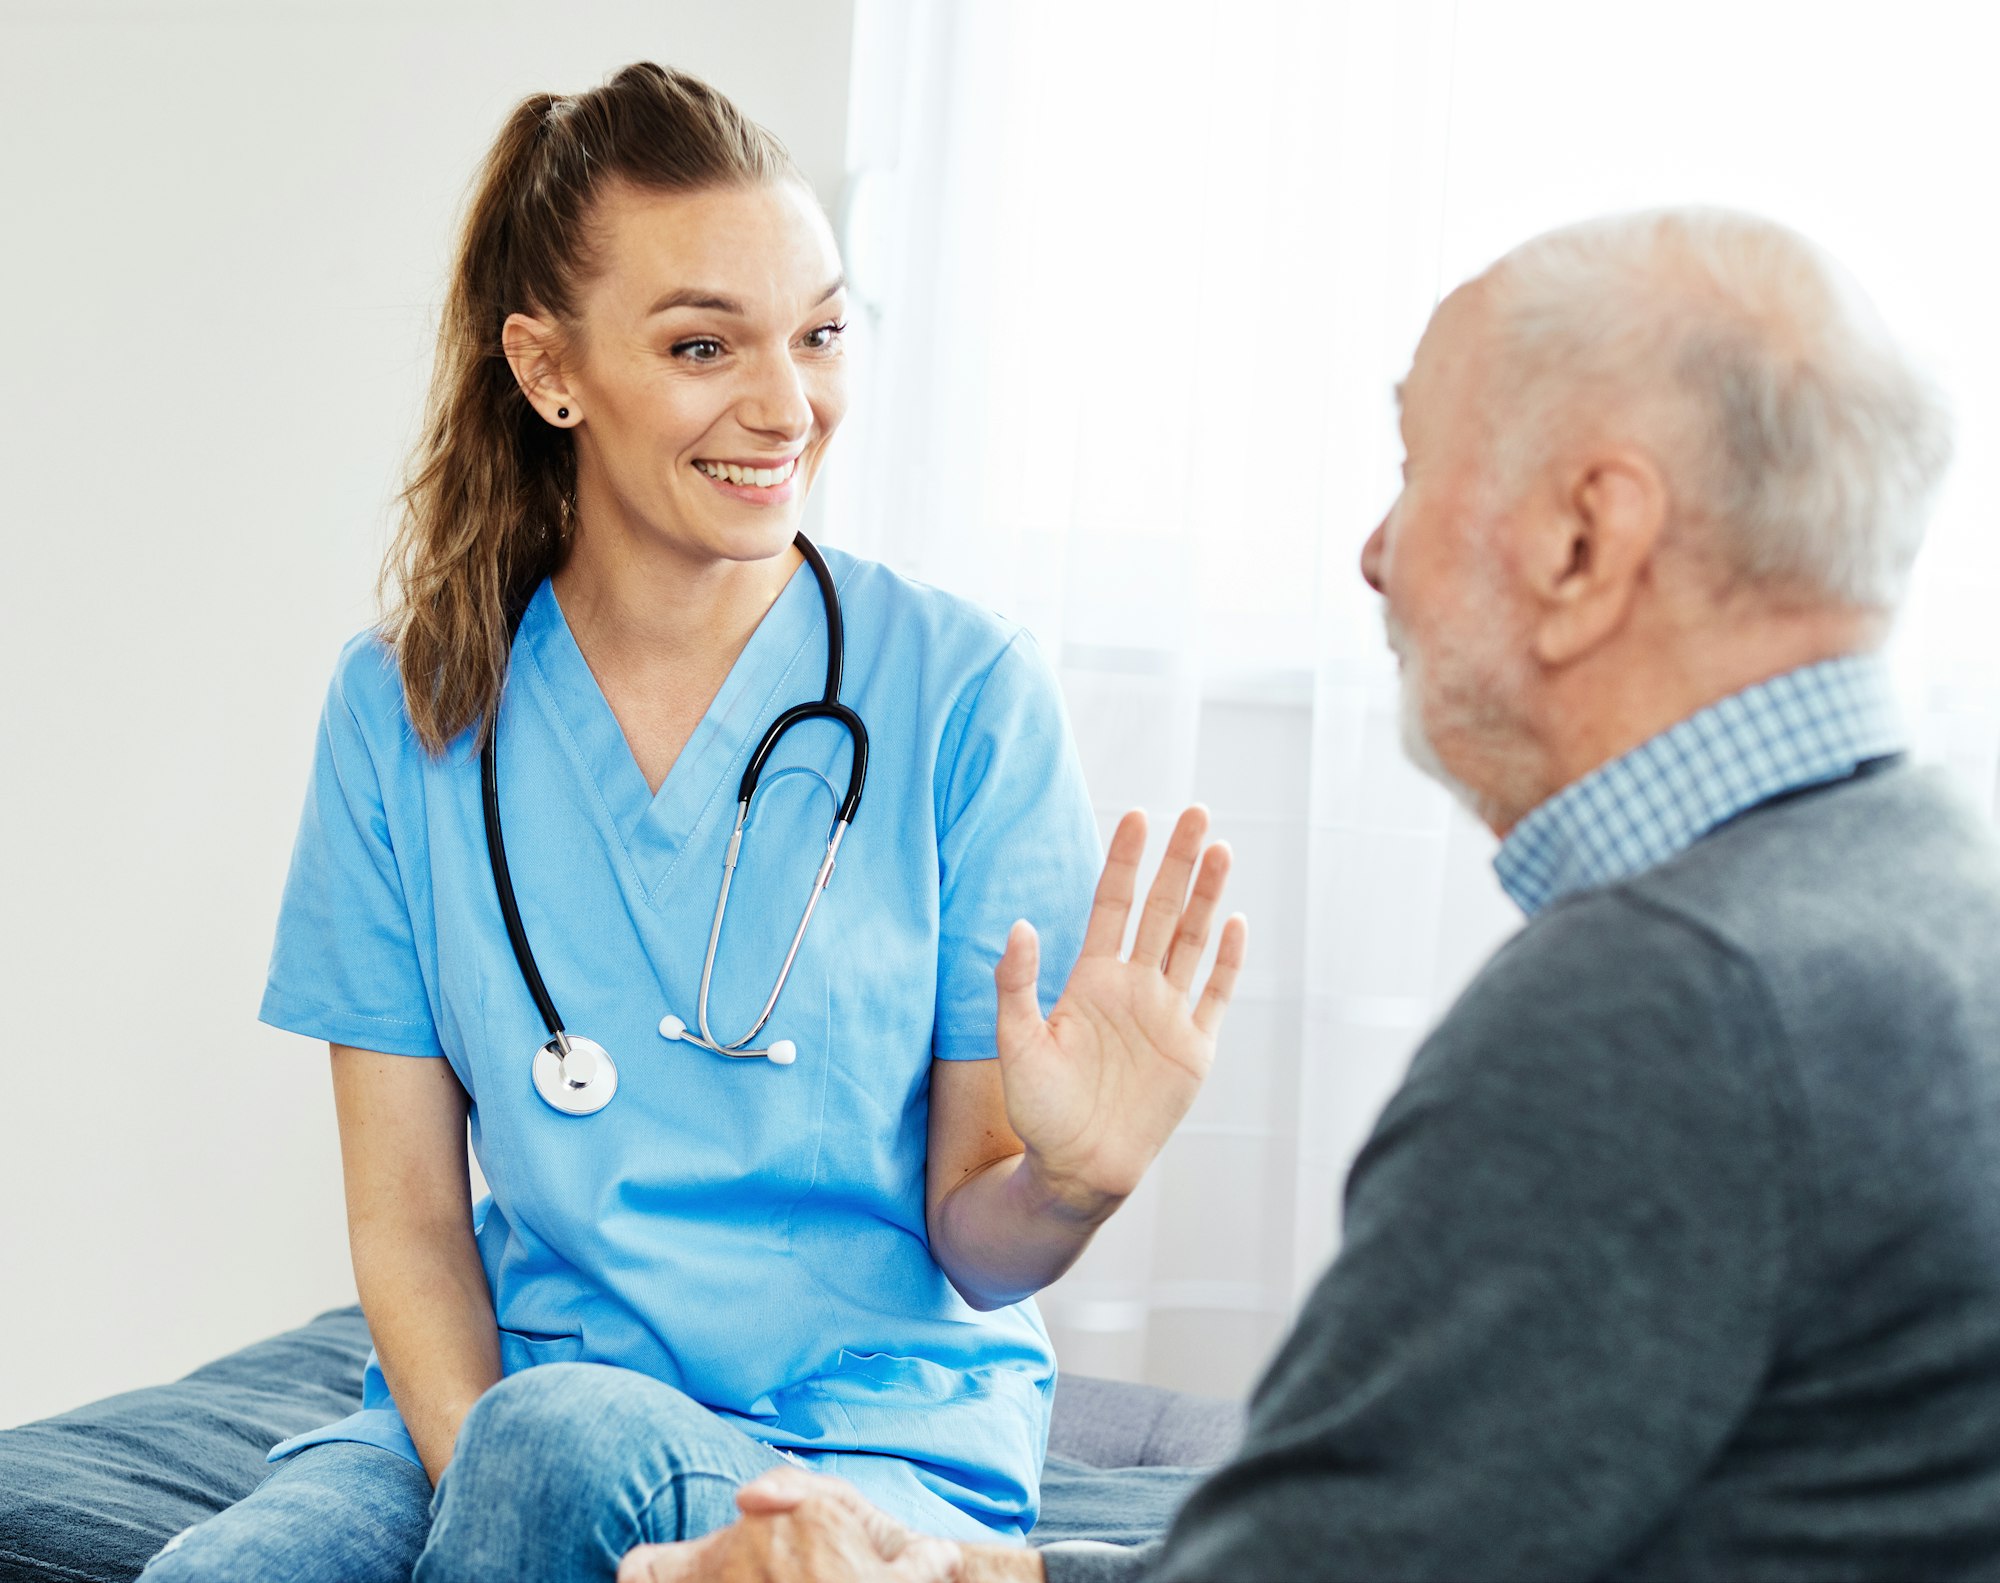 nurse-doctor-senior-care-caregiver-help-assistence-retirement-home-nursing-elderly-man-woman-health